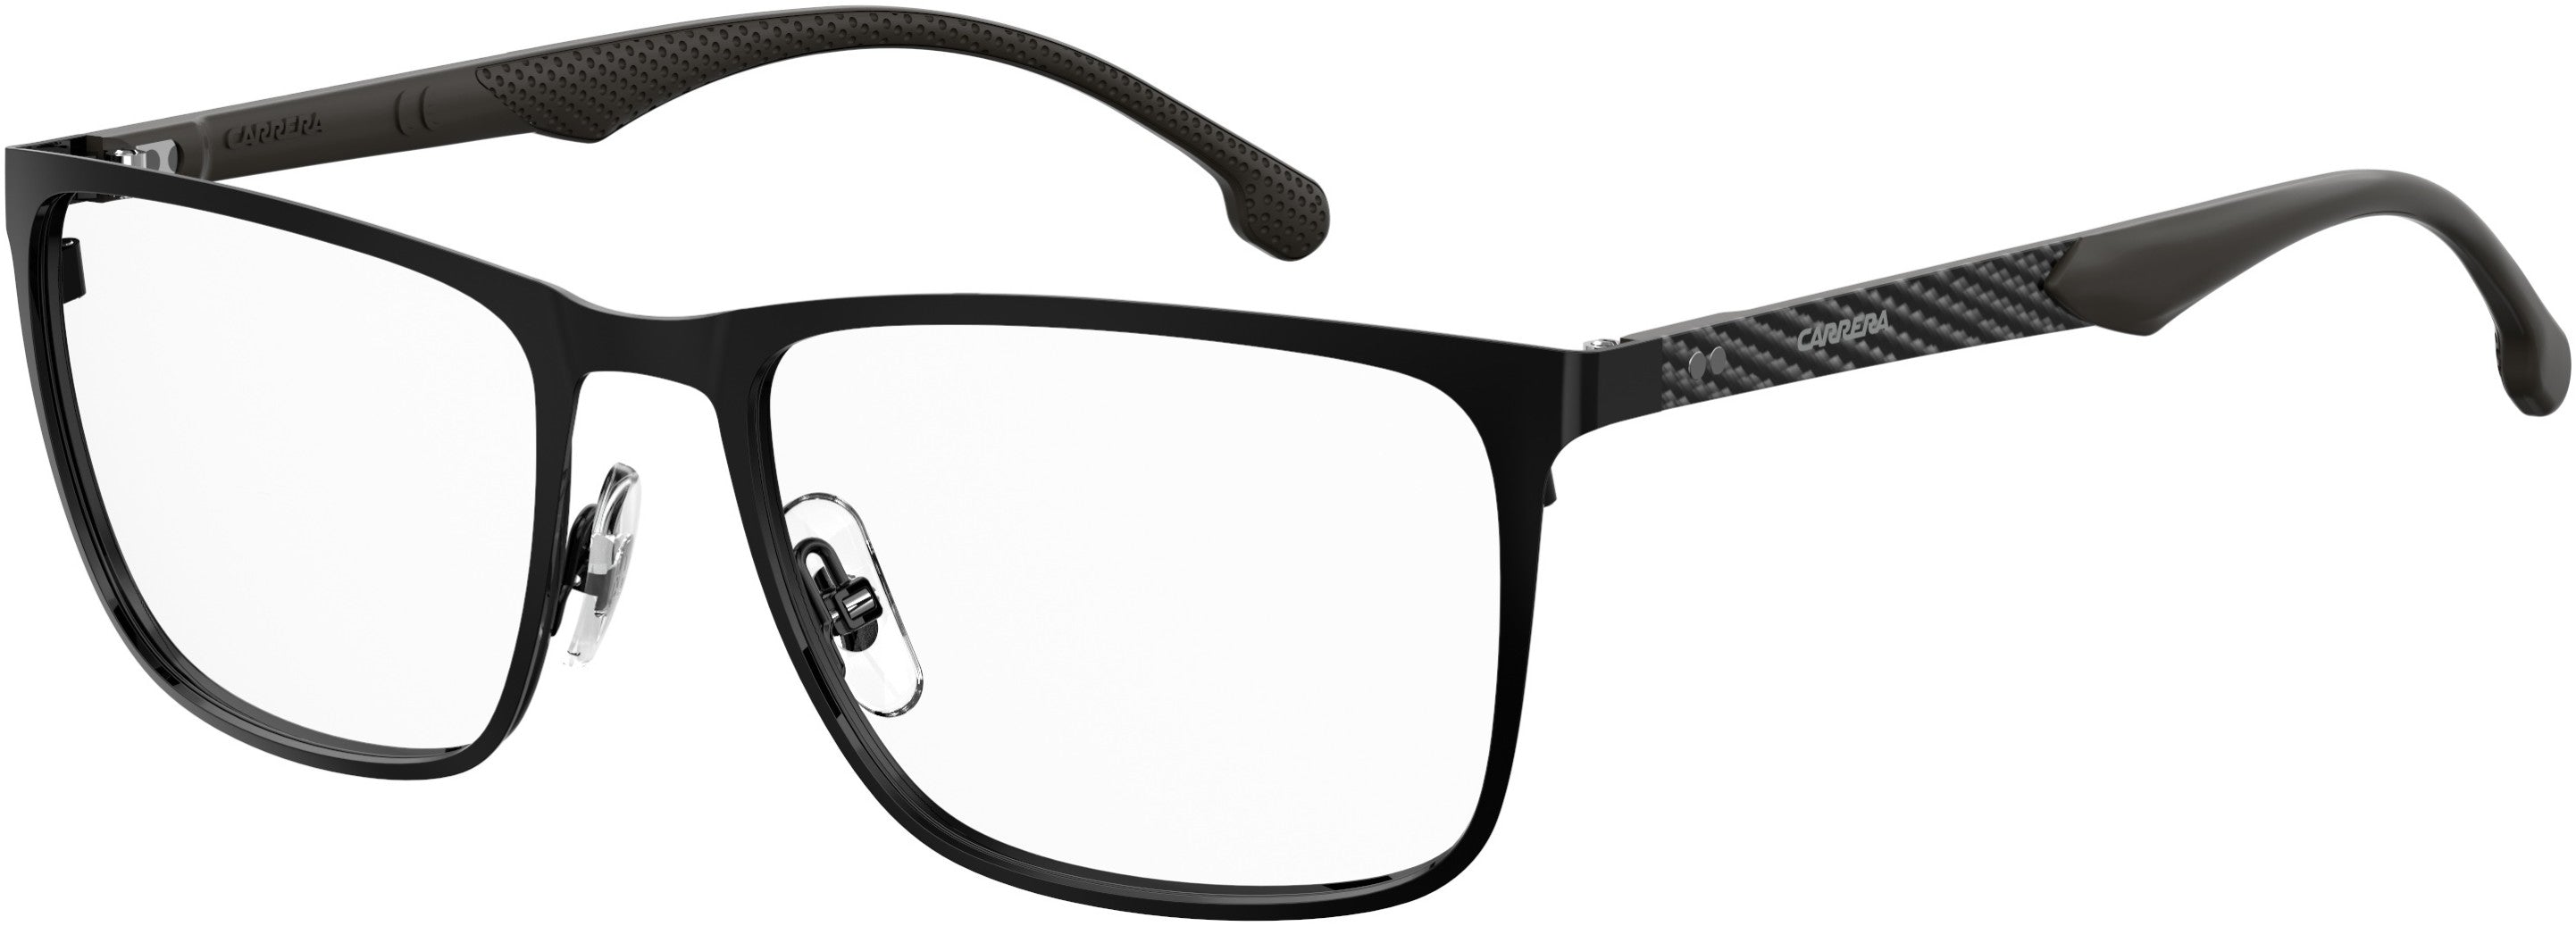  Carrera 8838 Rectangular Eyeglasses 0807-0807  Black (00 Demo Lens)